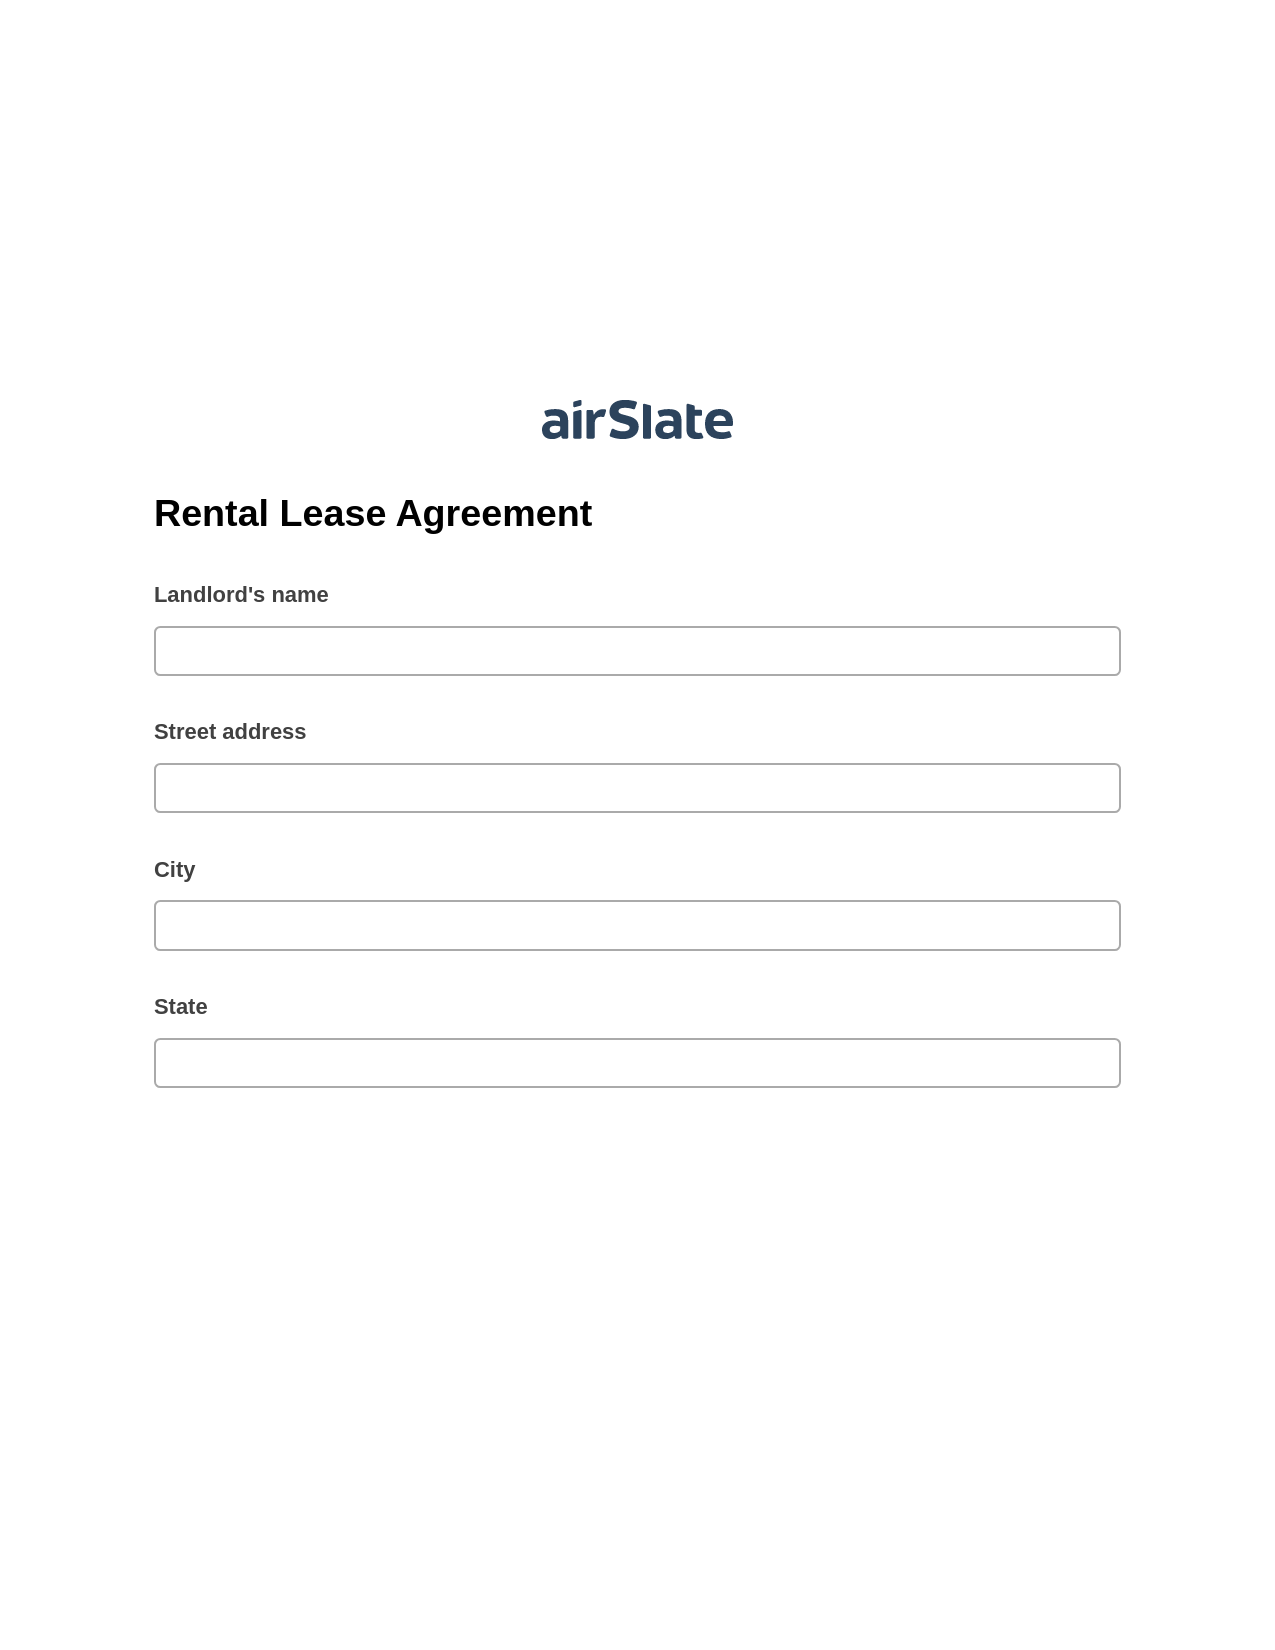 Rental Lease Agreement Pre-fill from CSV File Dropdown Options Bot, Create Slate every Google Sheet Update Bot, Slack Notification Postfinish Bot